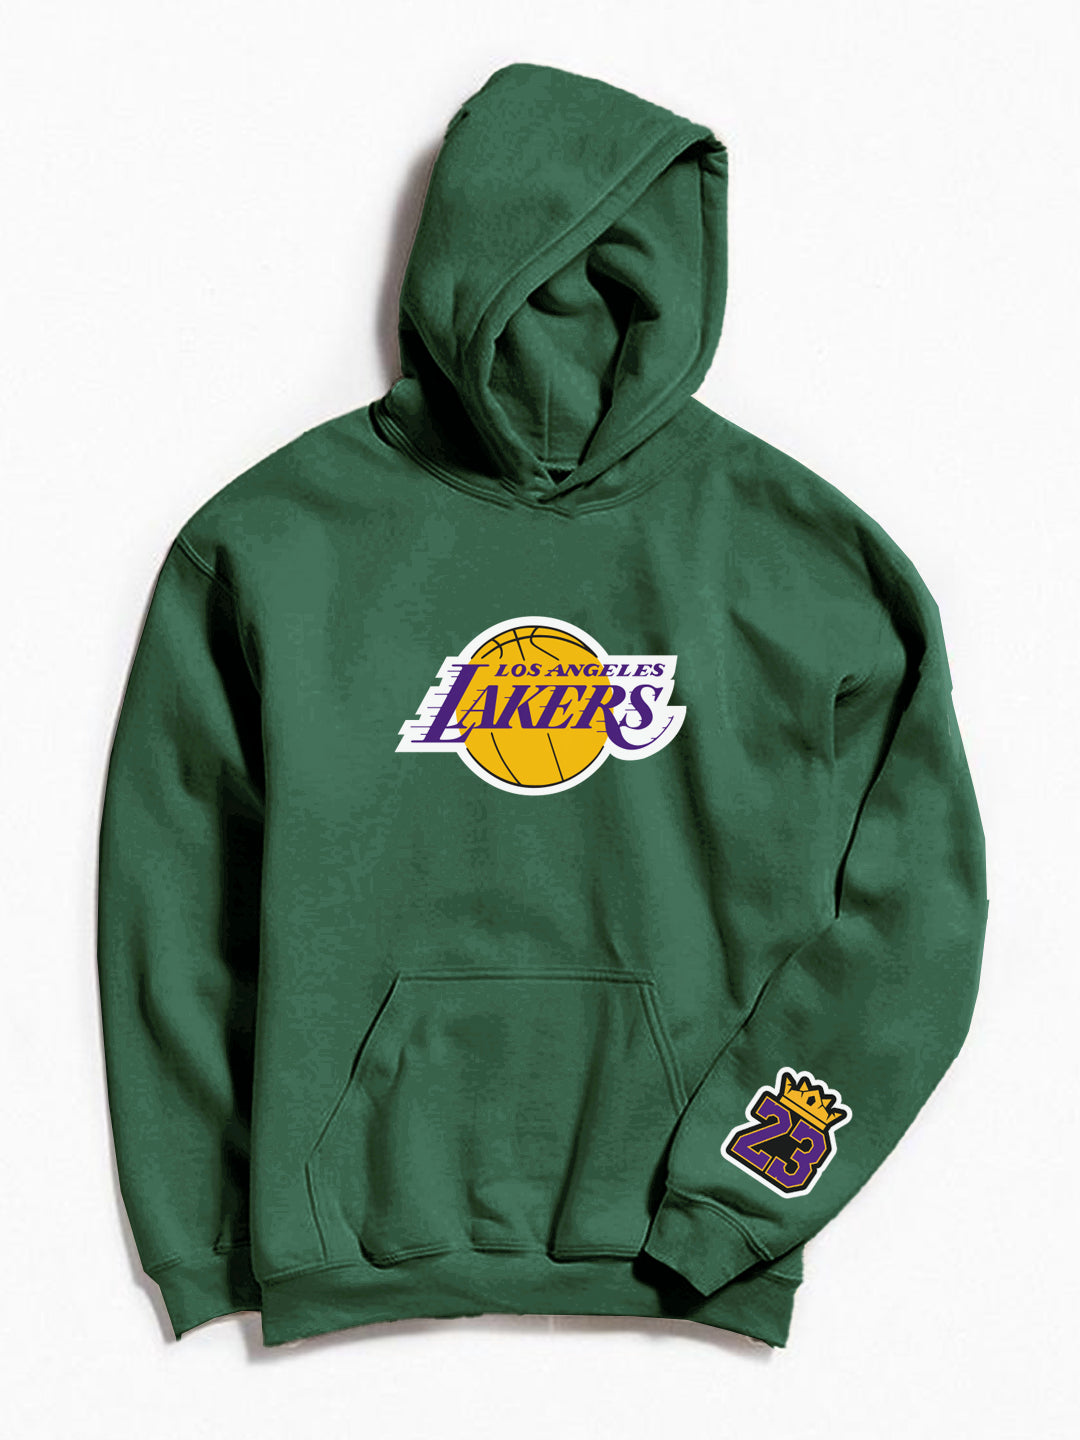 Oversized Lakers 23 Heavy Fleece Printed Hoodie